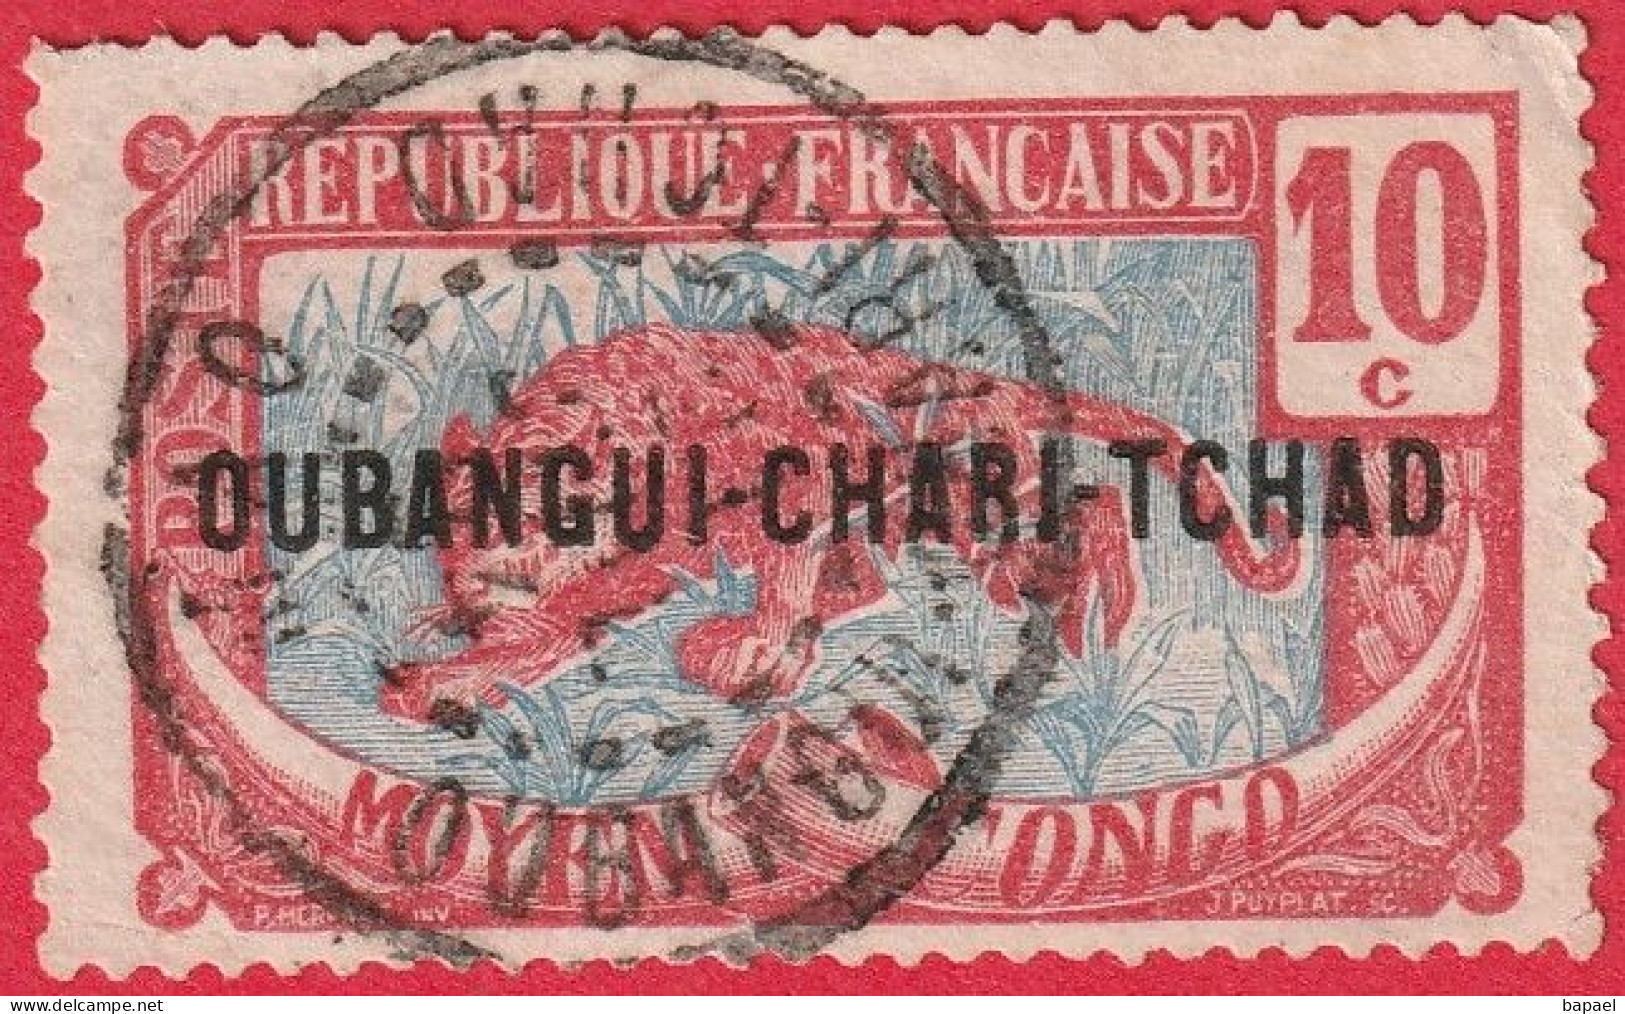 N° Yvert&Tellier 5 - Colonie Fse - Afrique (Oubangui) (1915-1918) - (O - Oblitéré) - Used Stamps